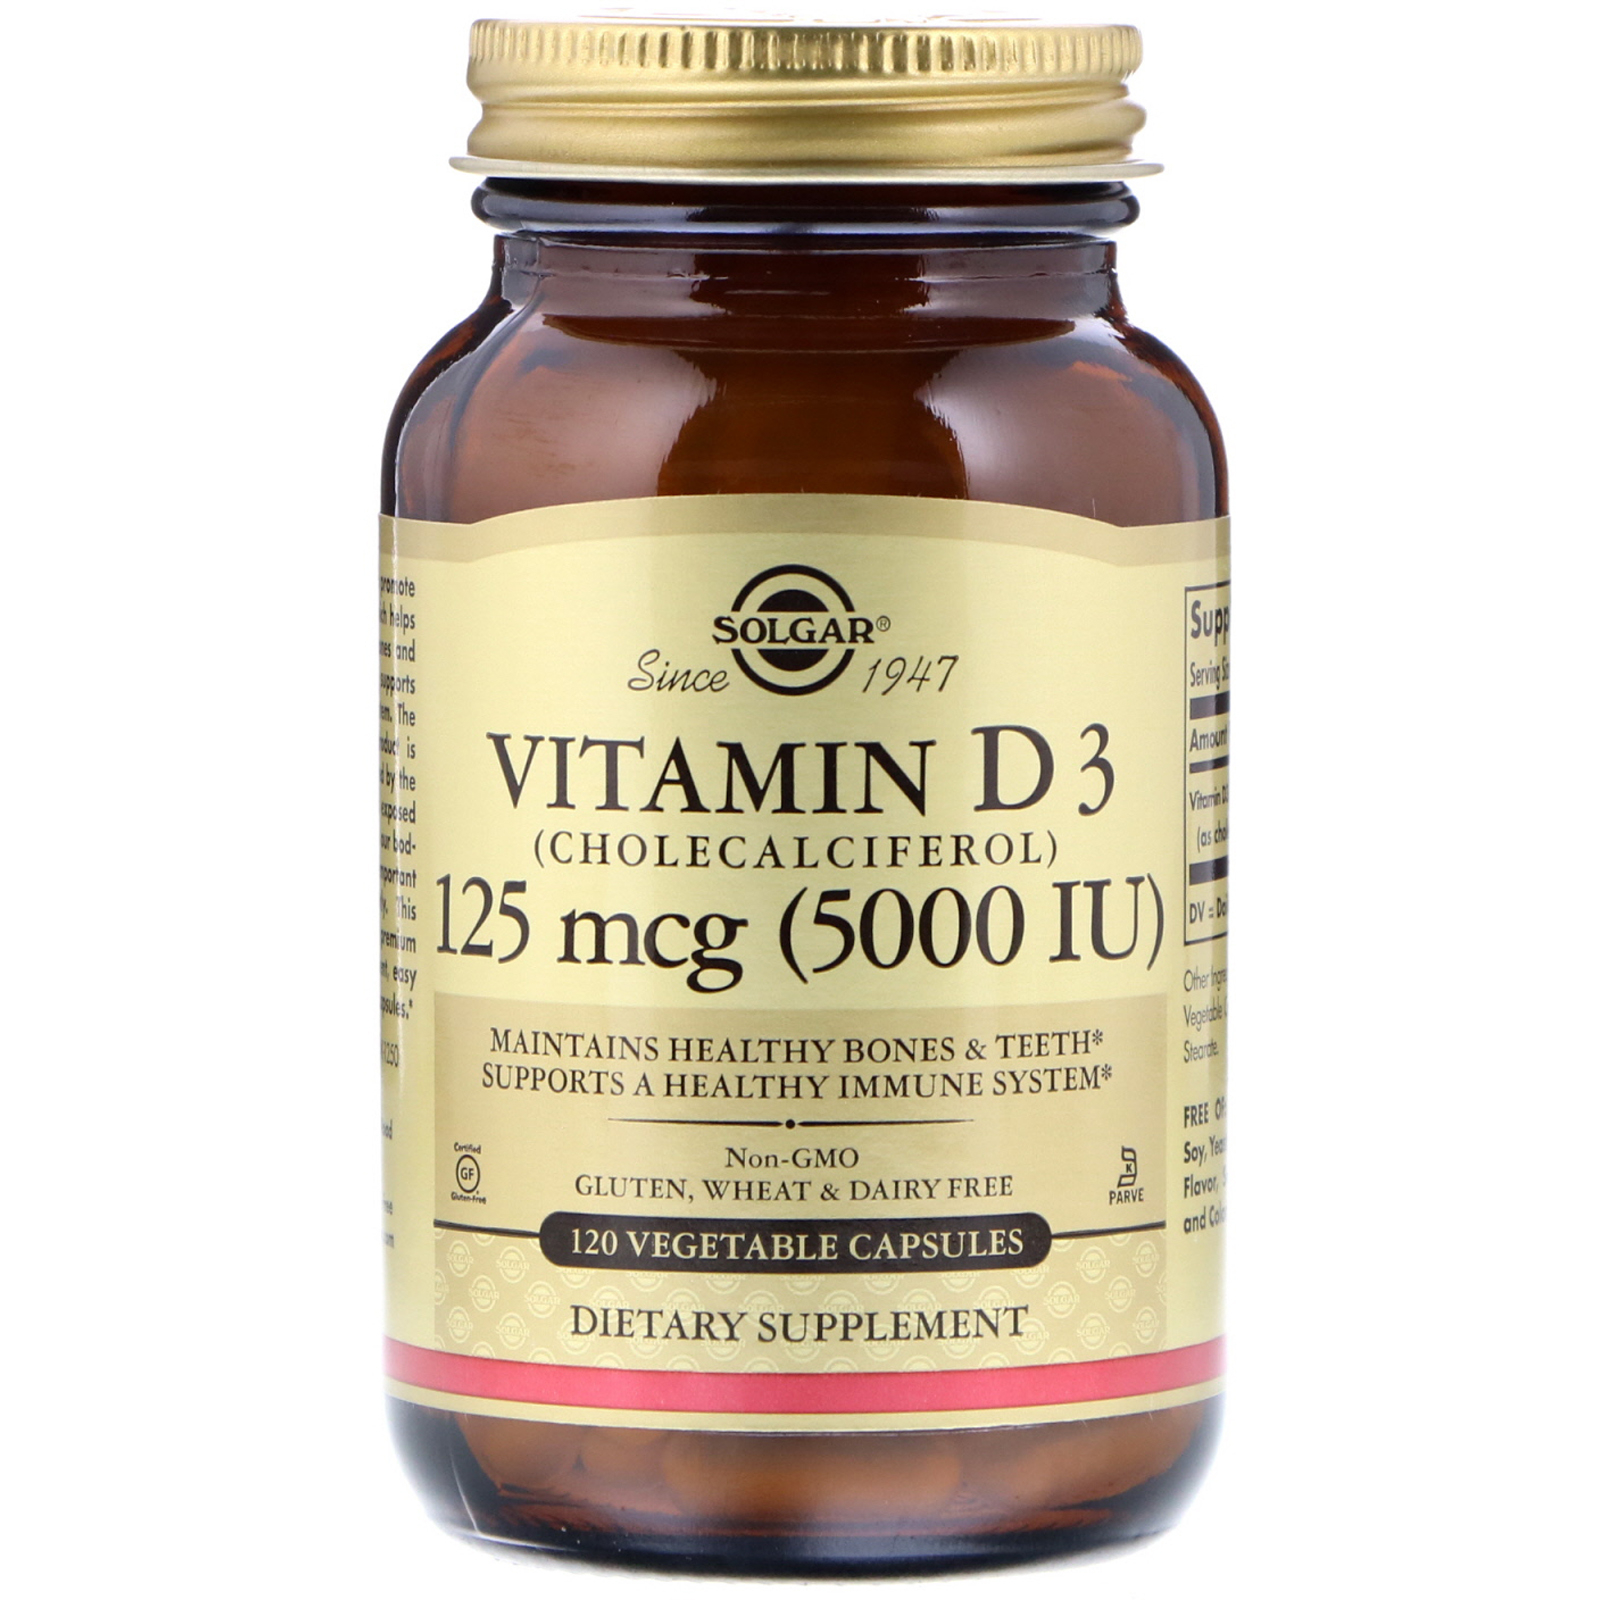 Solgar Vitamin D3 Cholecalciferol 125 Mcg 5000 Iu 120